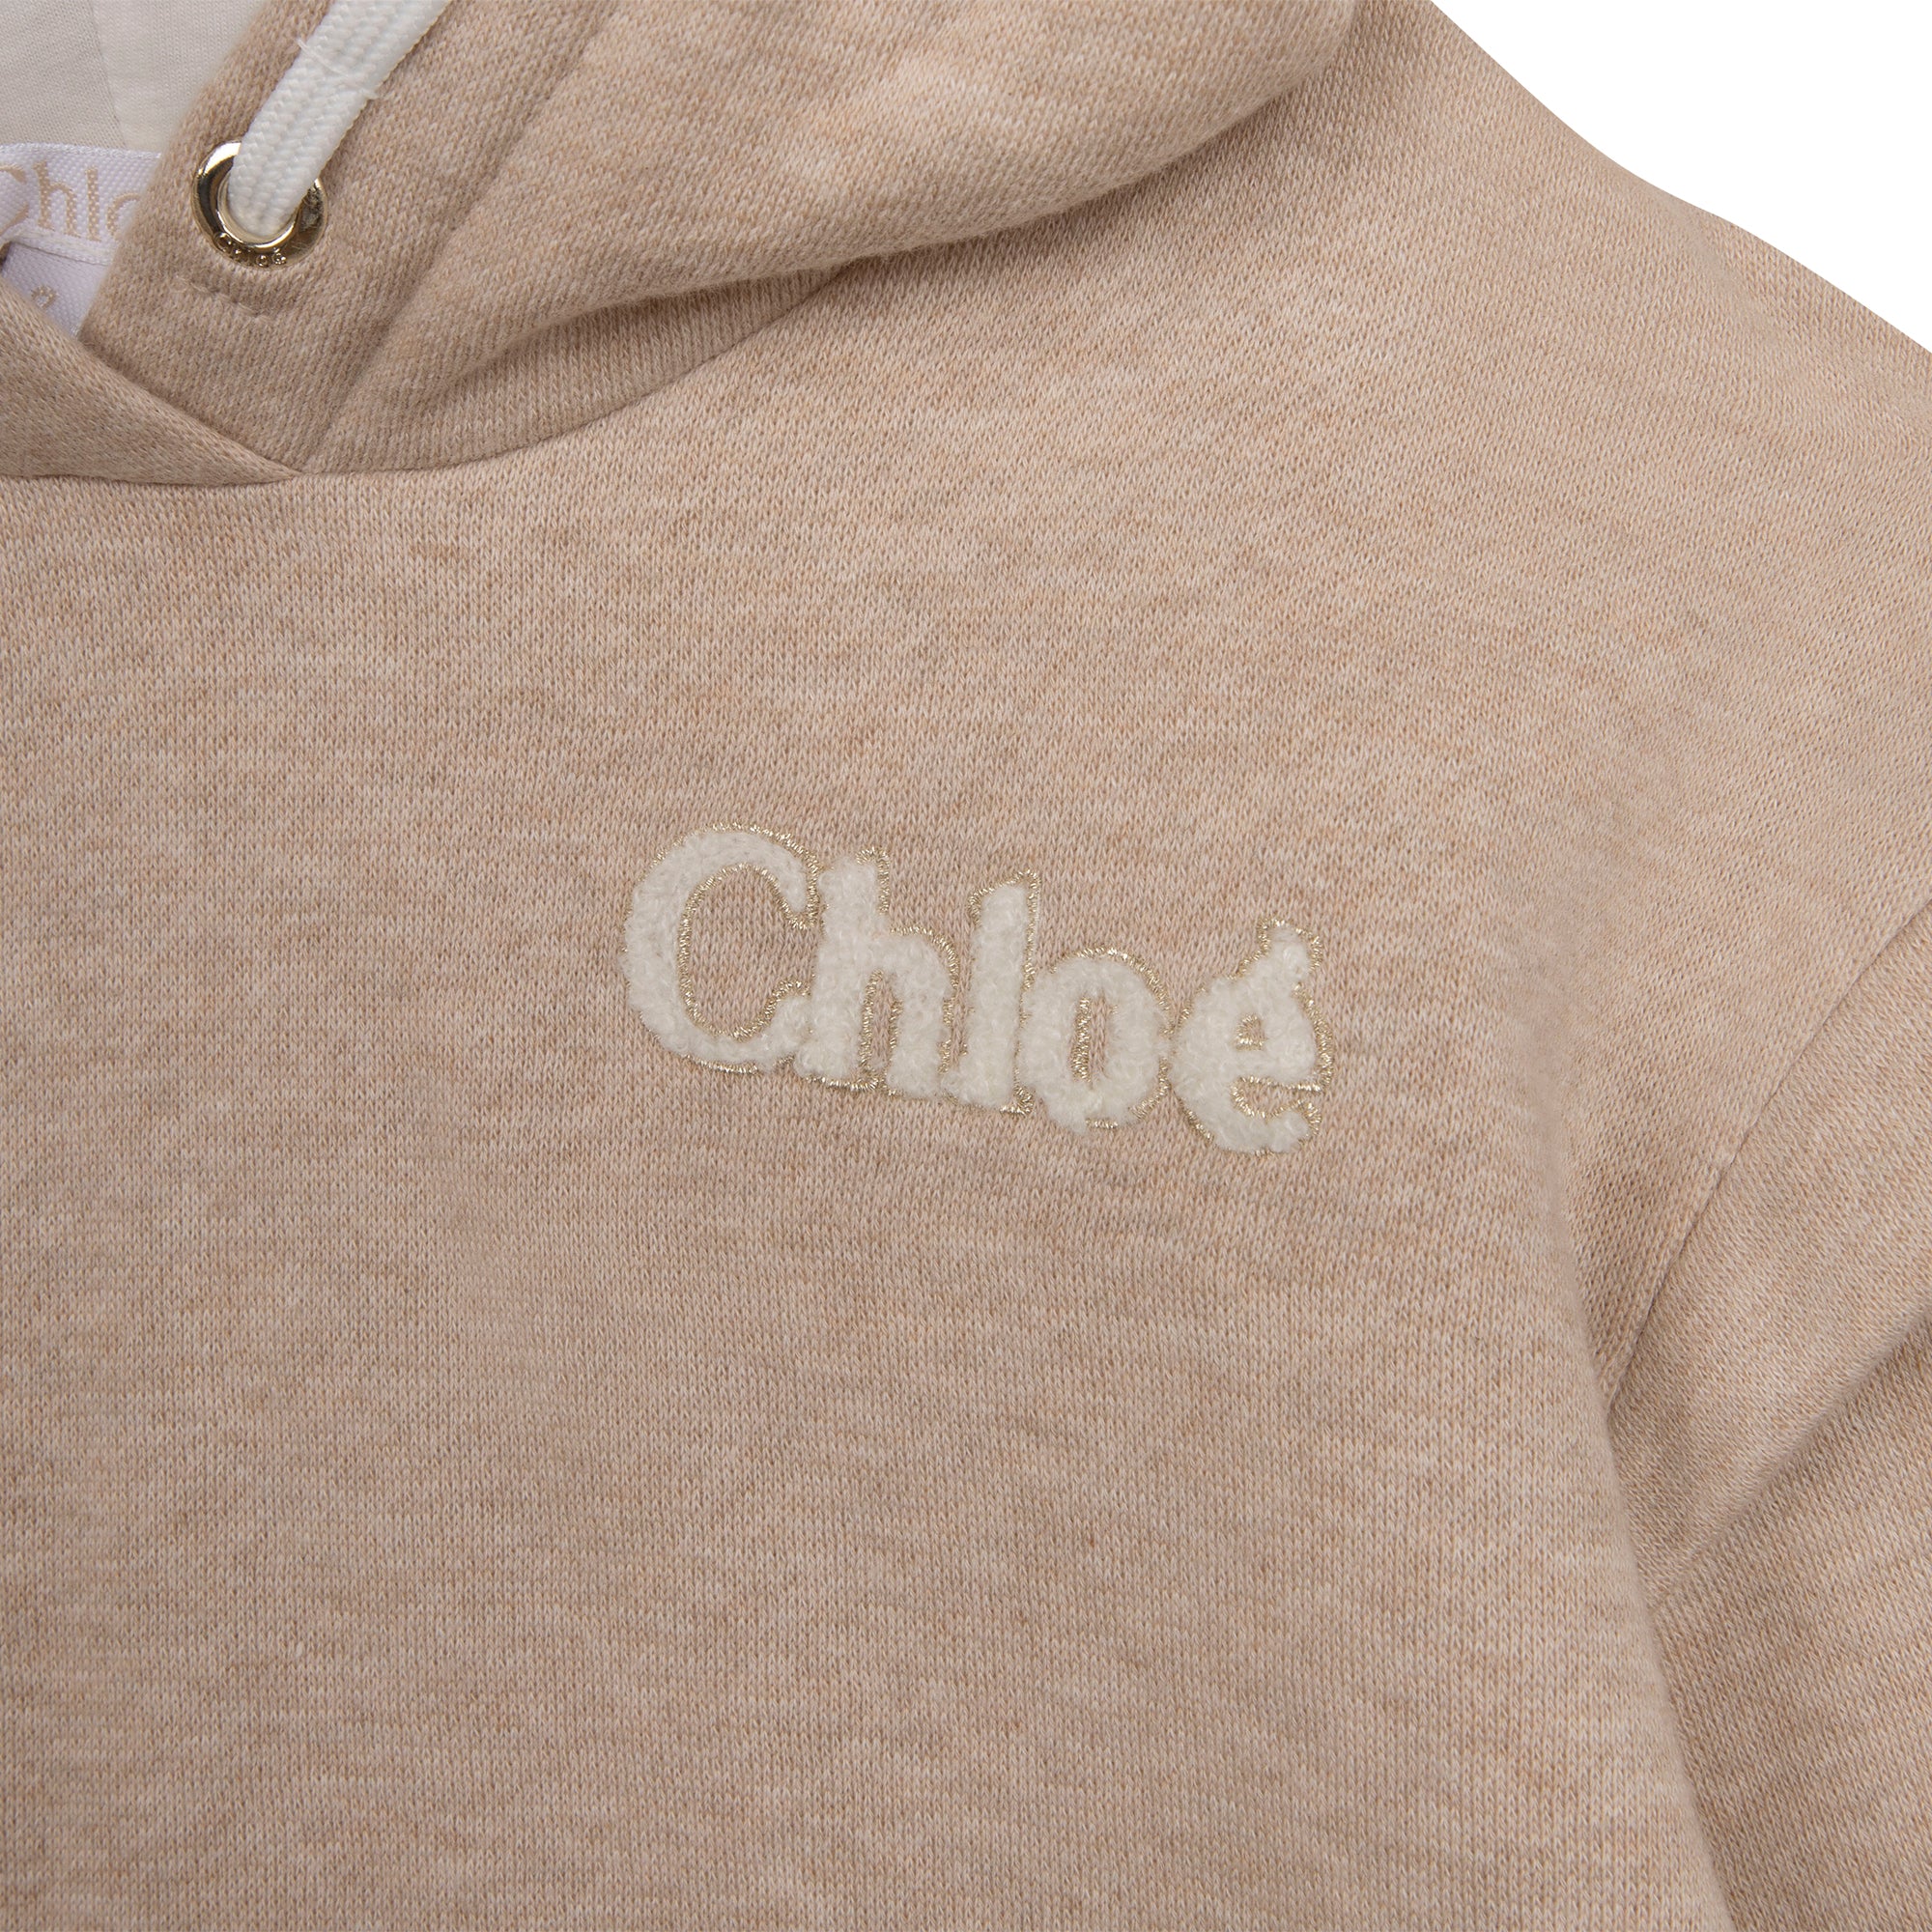 Chloé Girls Classic Logo Hoodie Beige